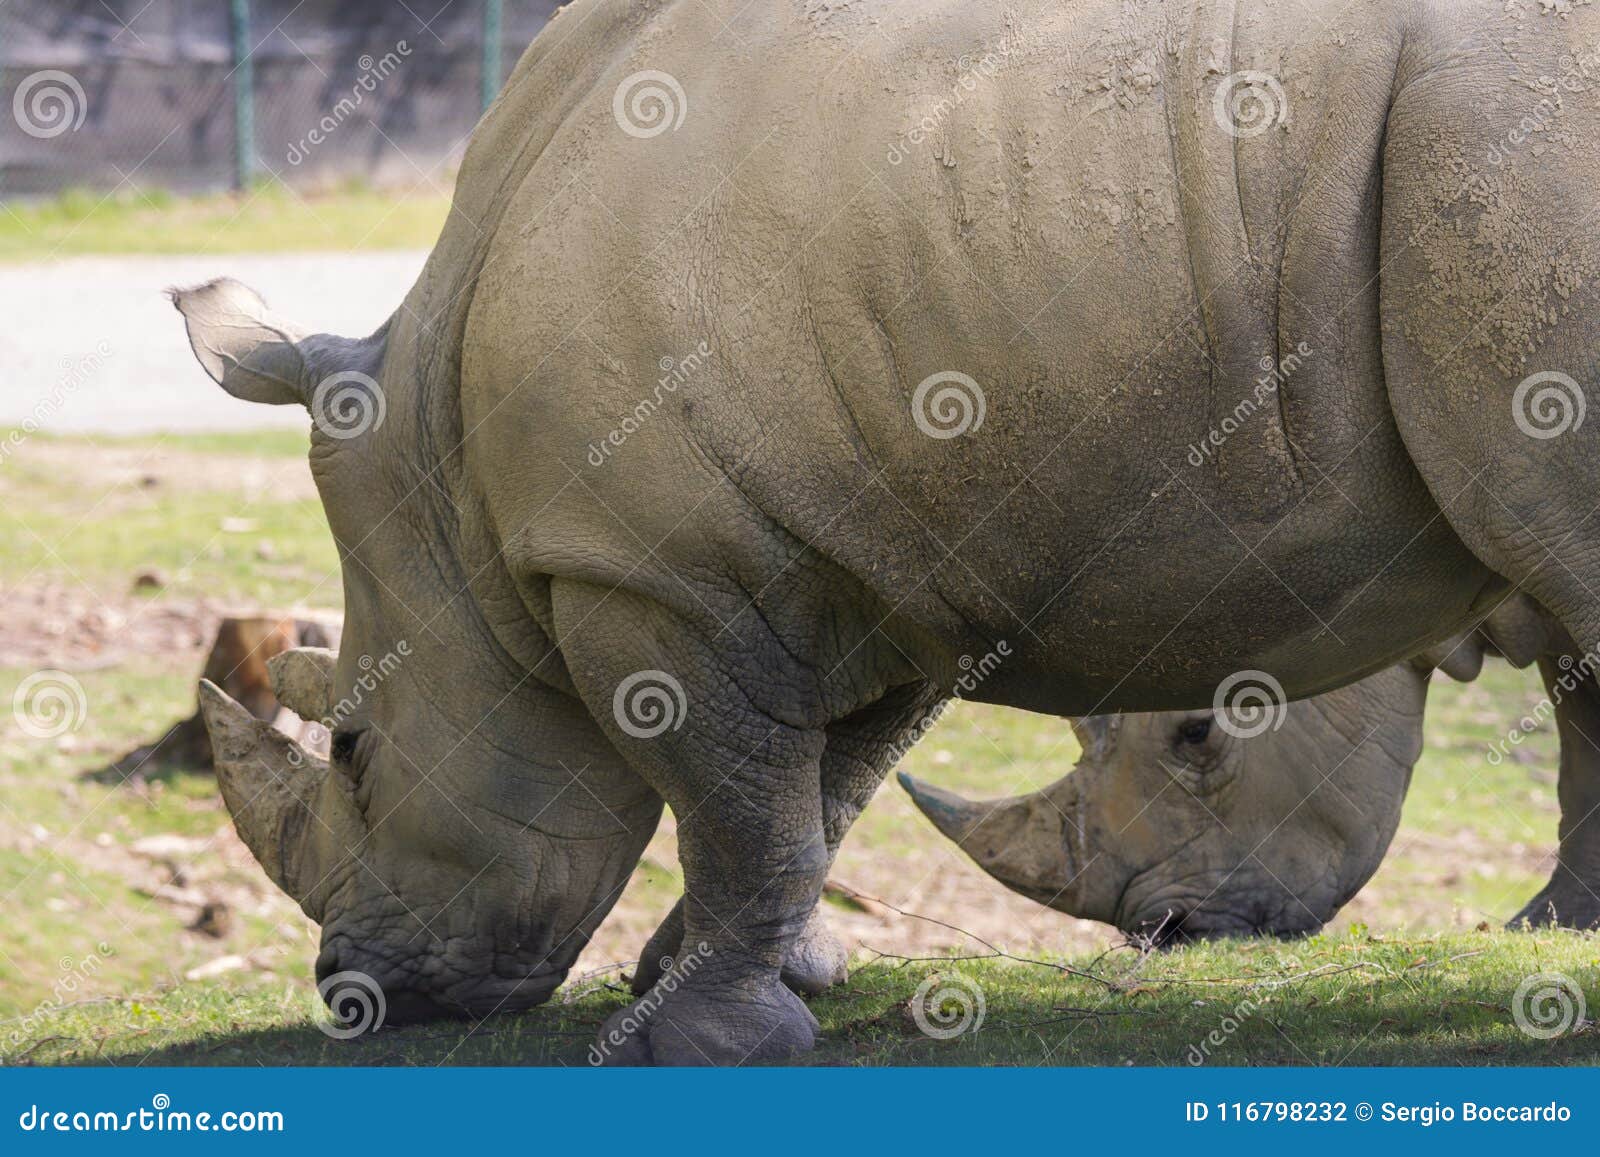 rhino in a zoo in italy